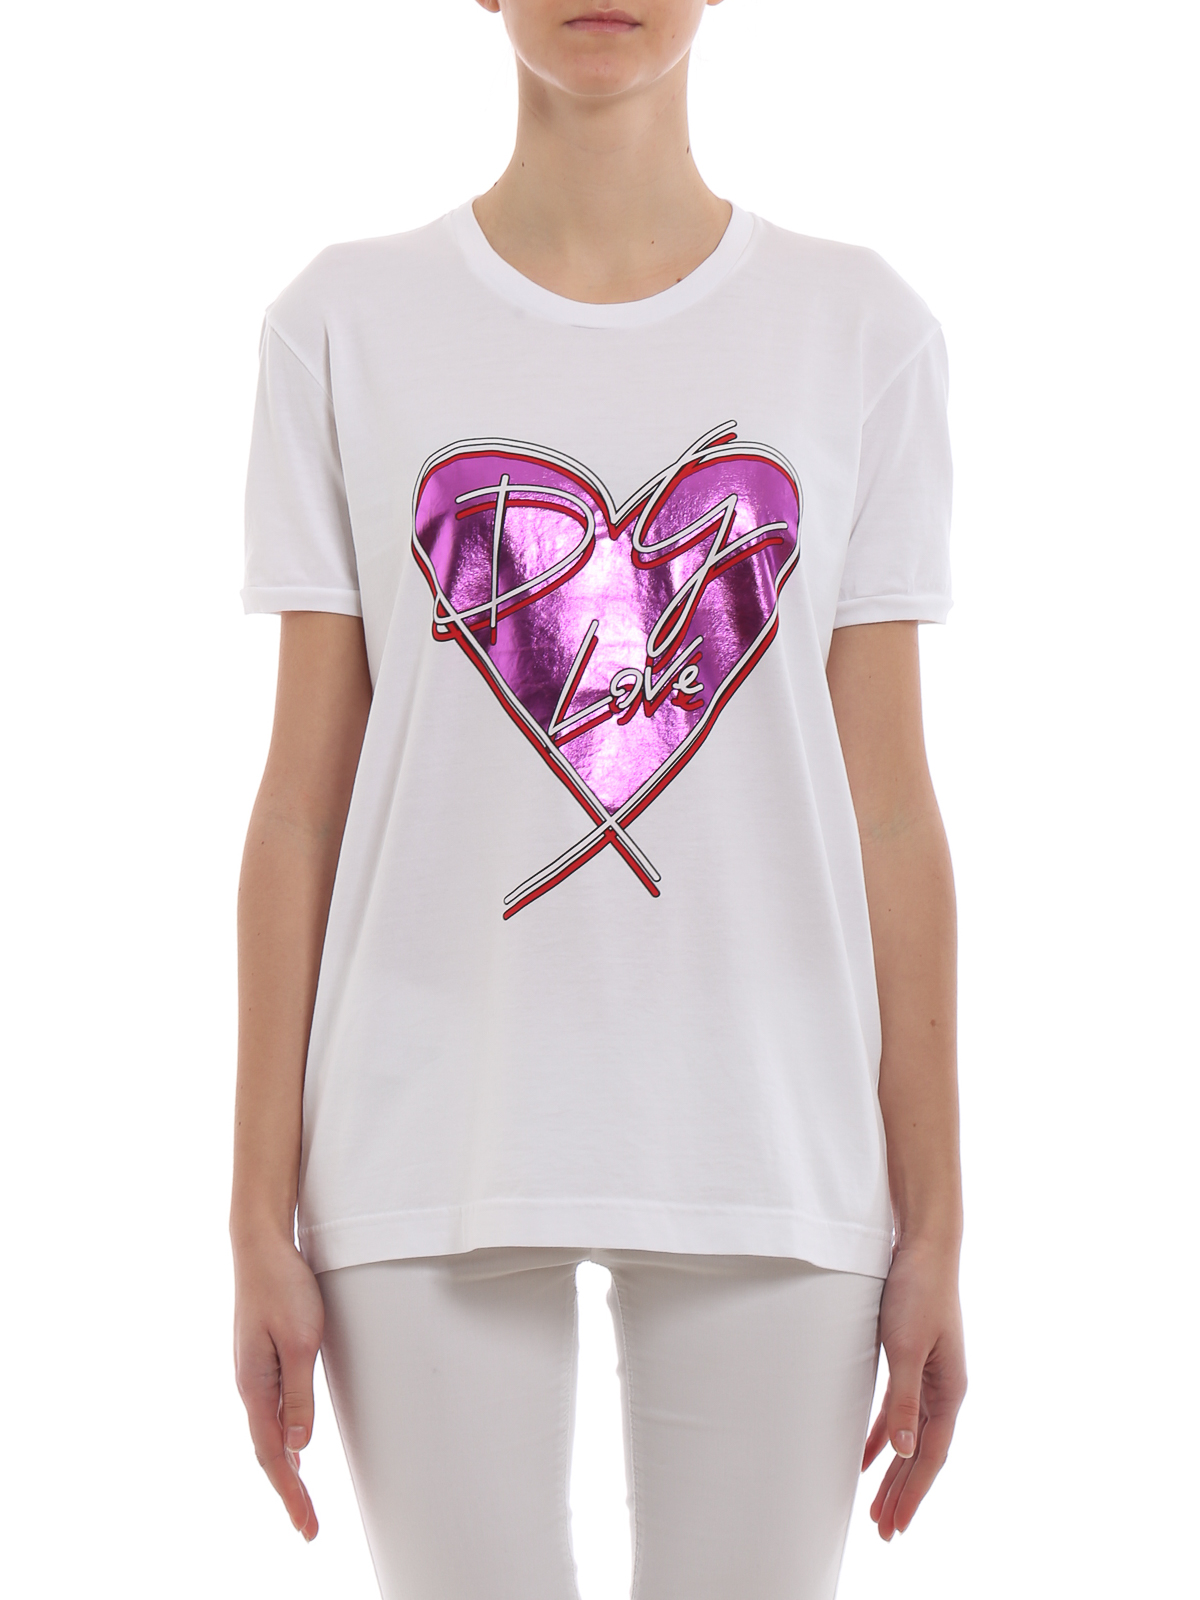 Displacement Amazing Barry T-shirts Dolce & Gabbana - DG Love heart print jersey T-shirt -  F8K74ZG7RKEW0800